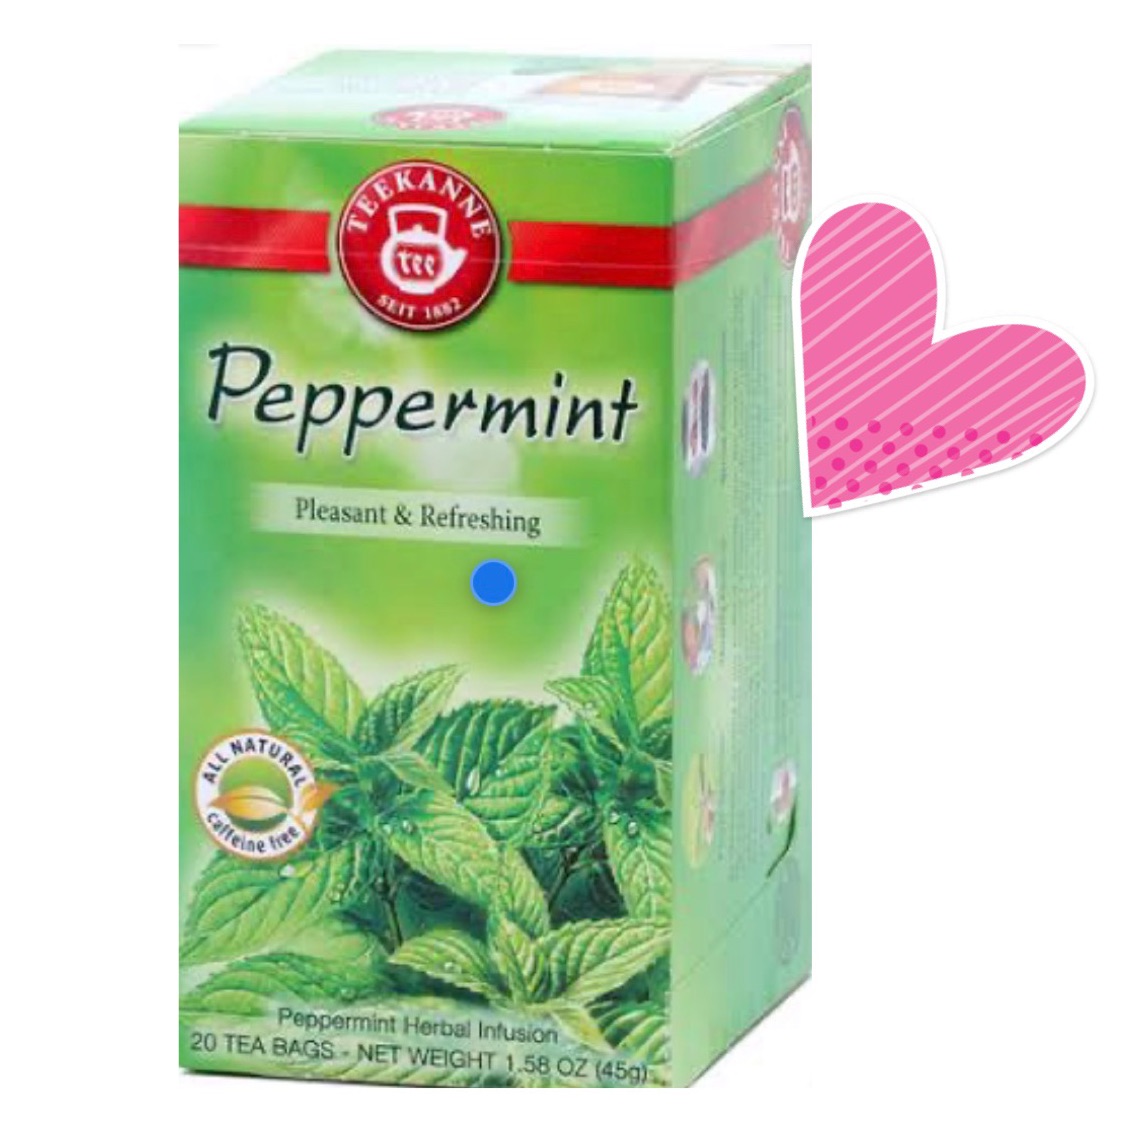 Teekanne Tea Germany Tea 🇩🇪 100% Natural caffeine free ชา จาก ธรรมชาติ ไม่มีคาแฟอีน สินค้าจาก เยอรมัน Peppermint Tea , 20 Tea Bags In stock ready to ship